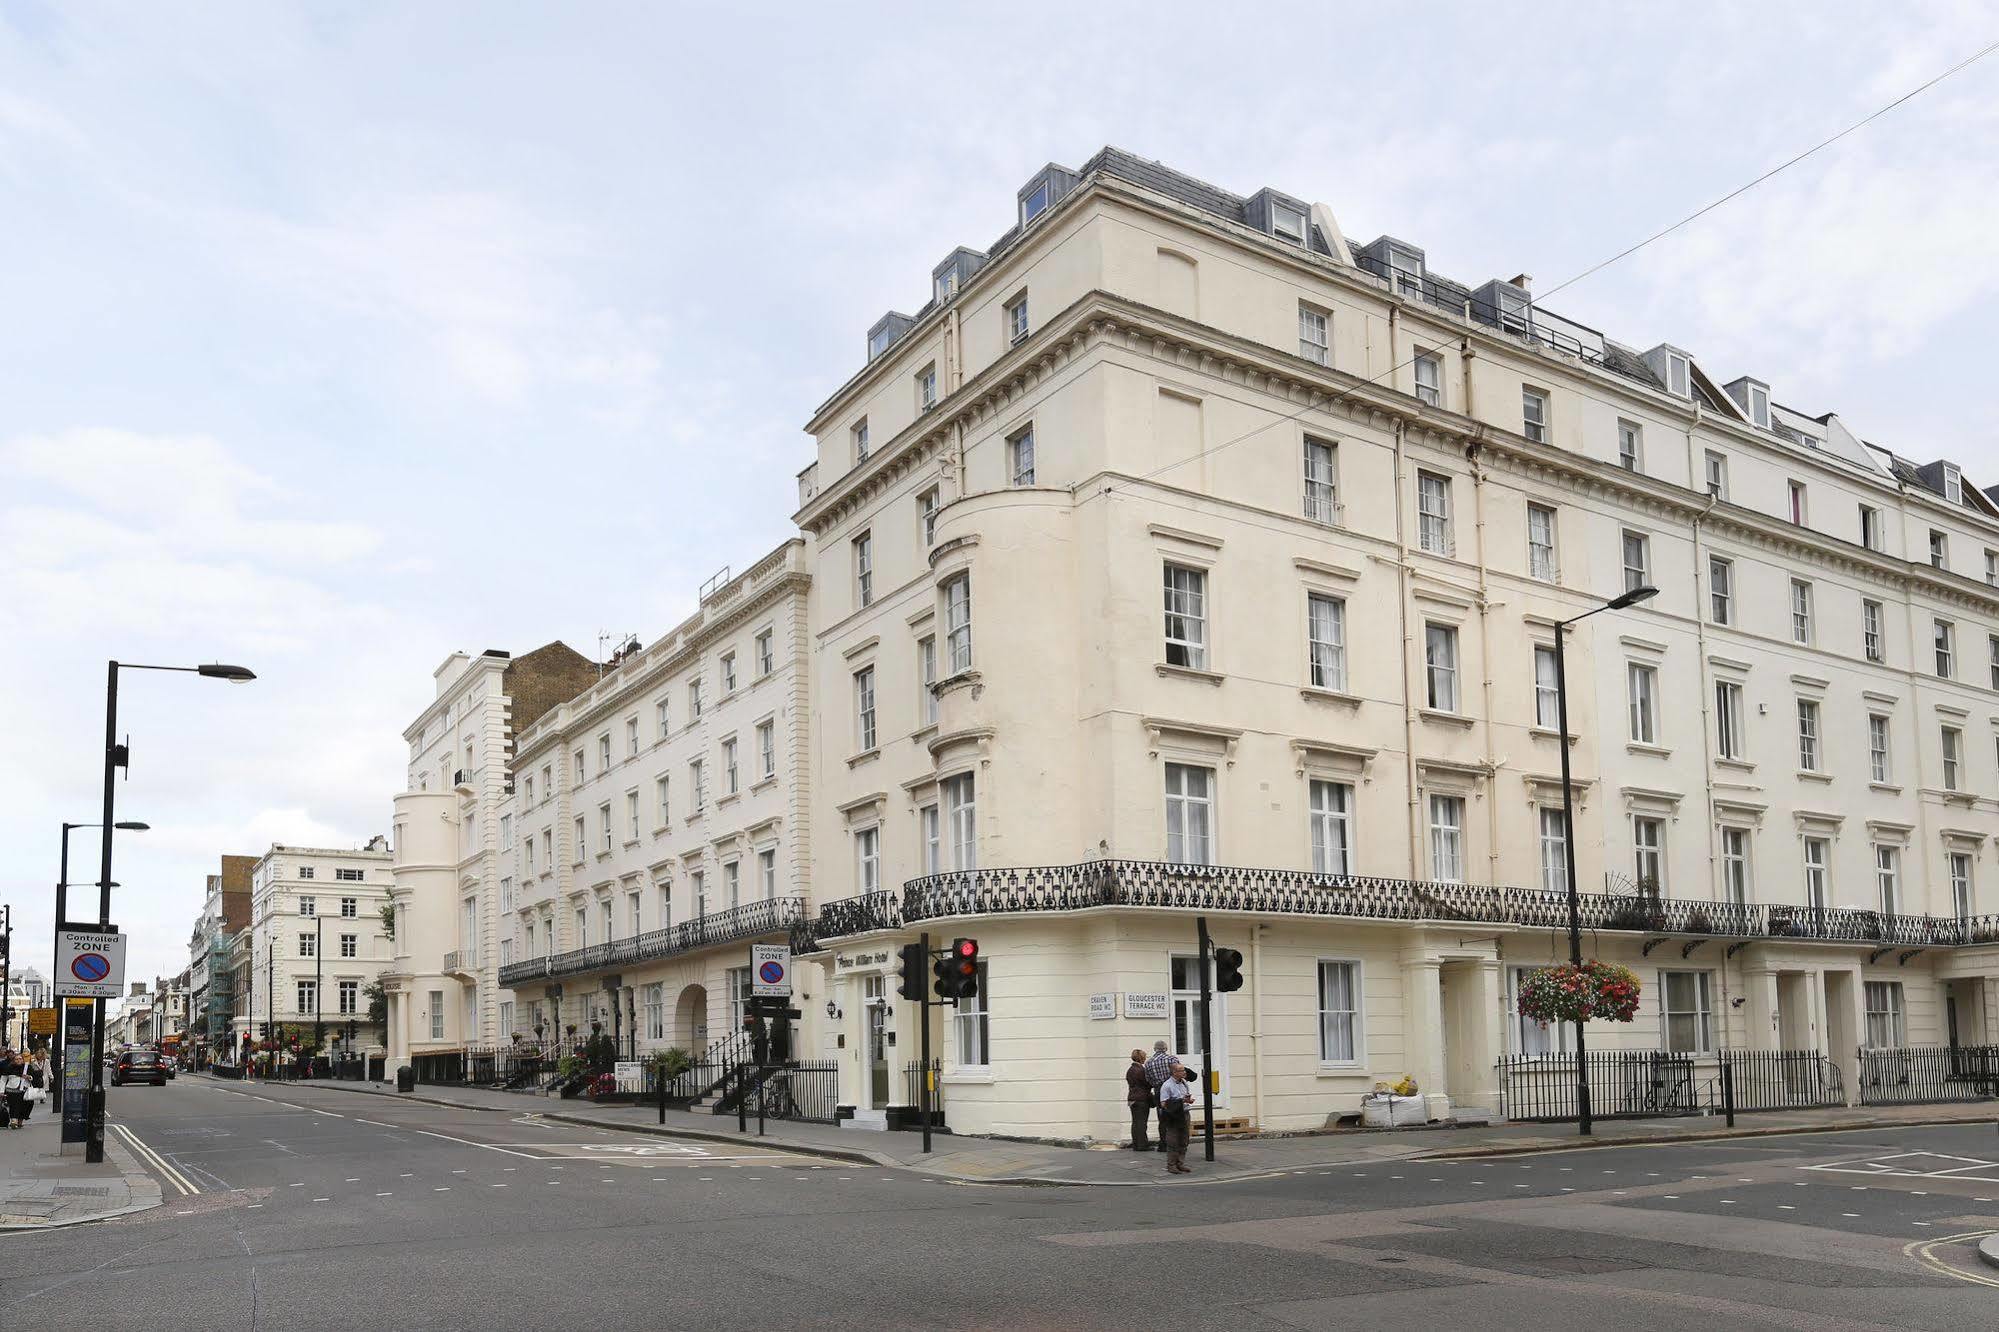 Prince William Hotel London Exterior photo